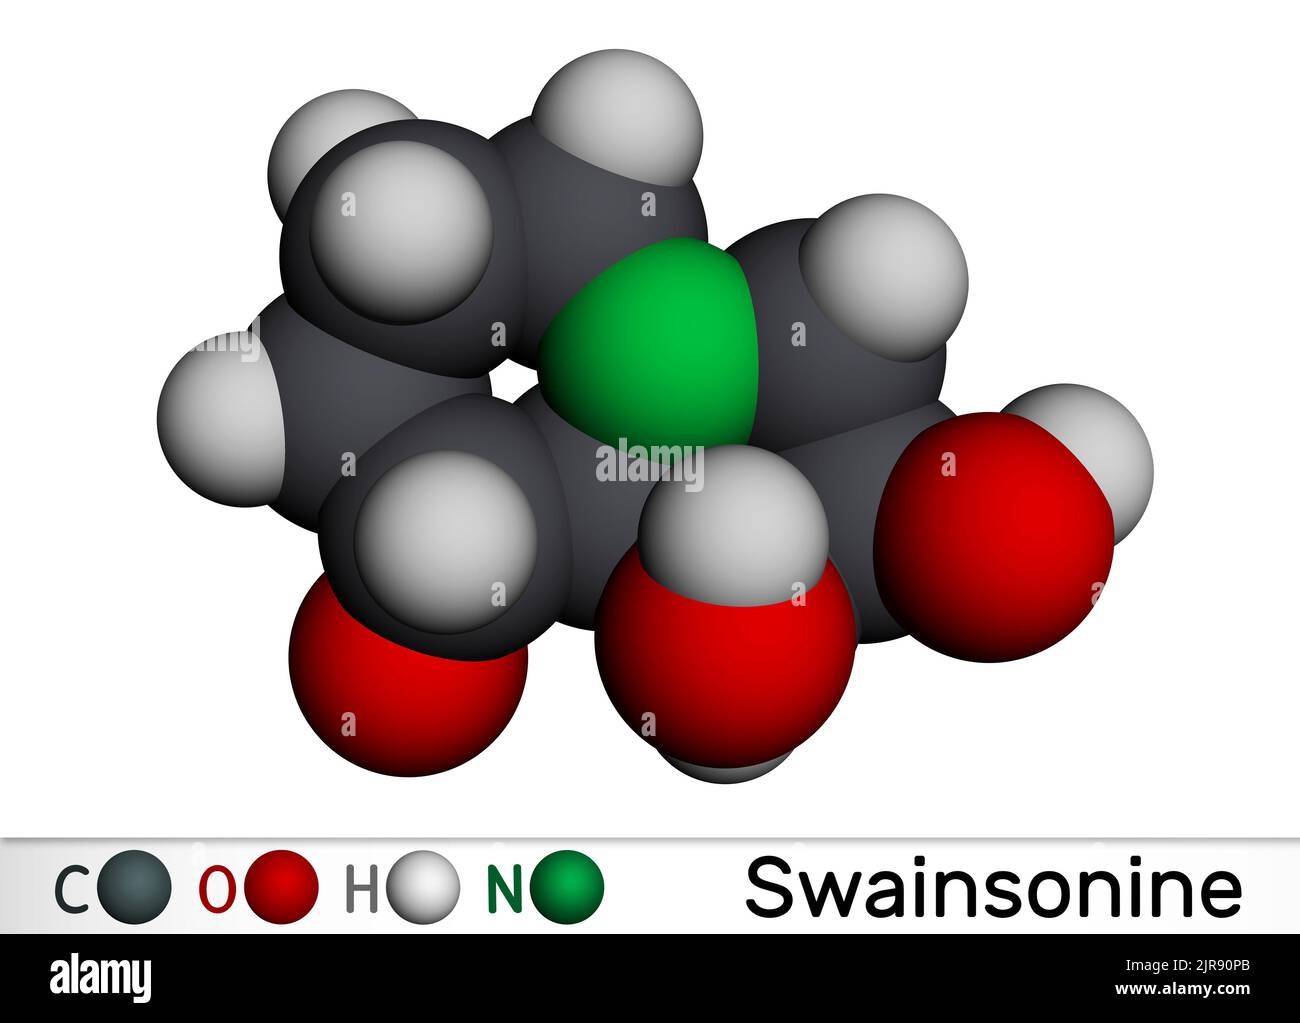 Swainsonine, tridolgosir molecule. It is indolizidine alkaloid from the plant Swainsona, with immunomodulatory activity. Molecular model. 3D rendering Stock Photo